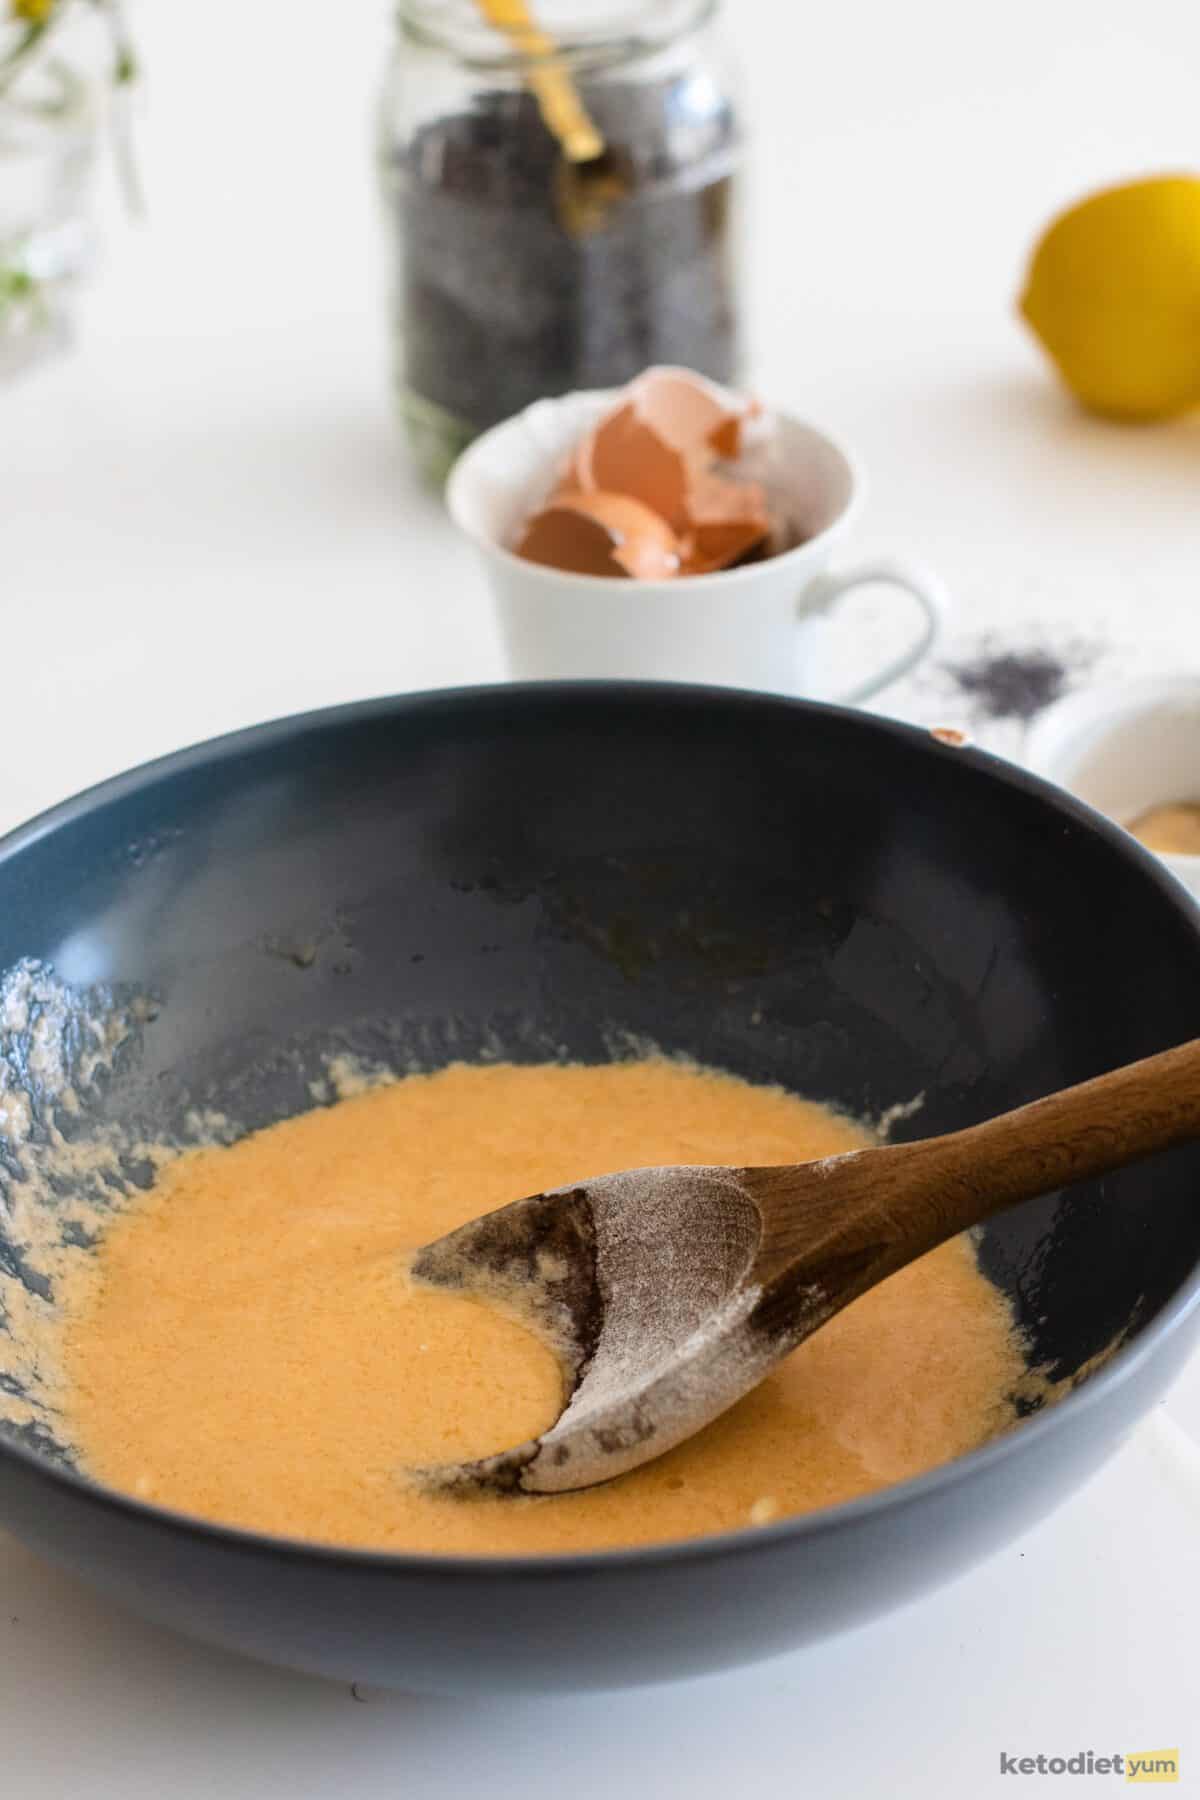 lemon poppy seed cupcakes - mixing wet ingredients